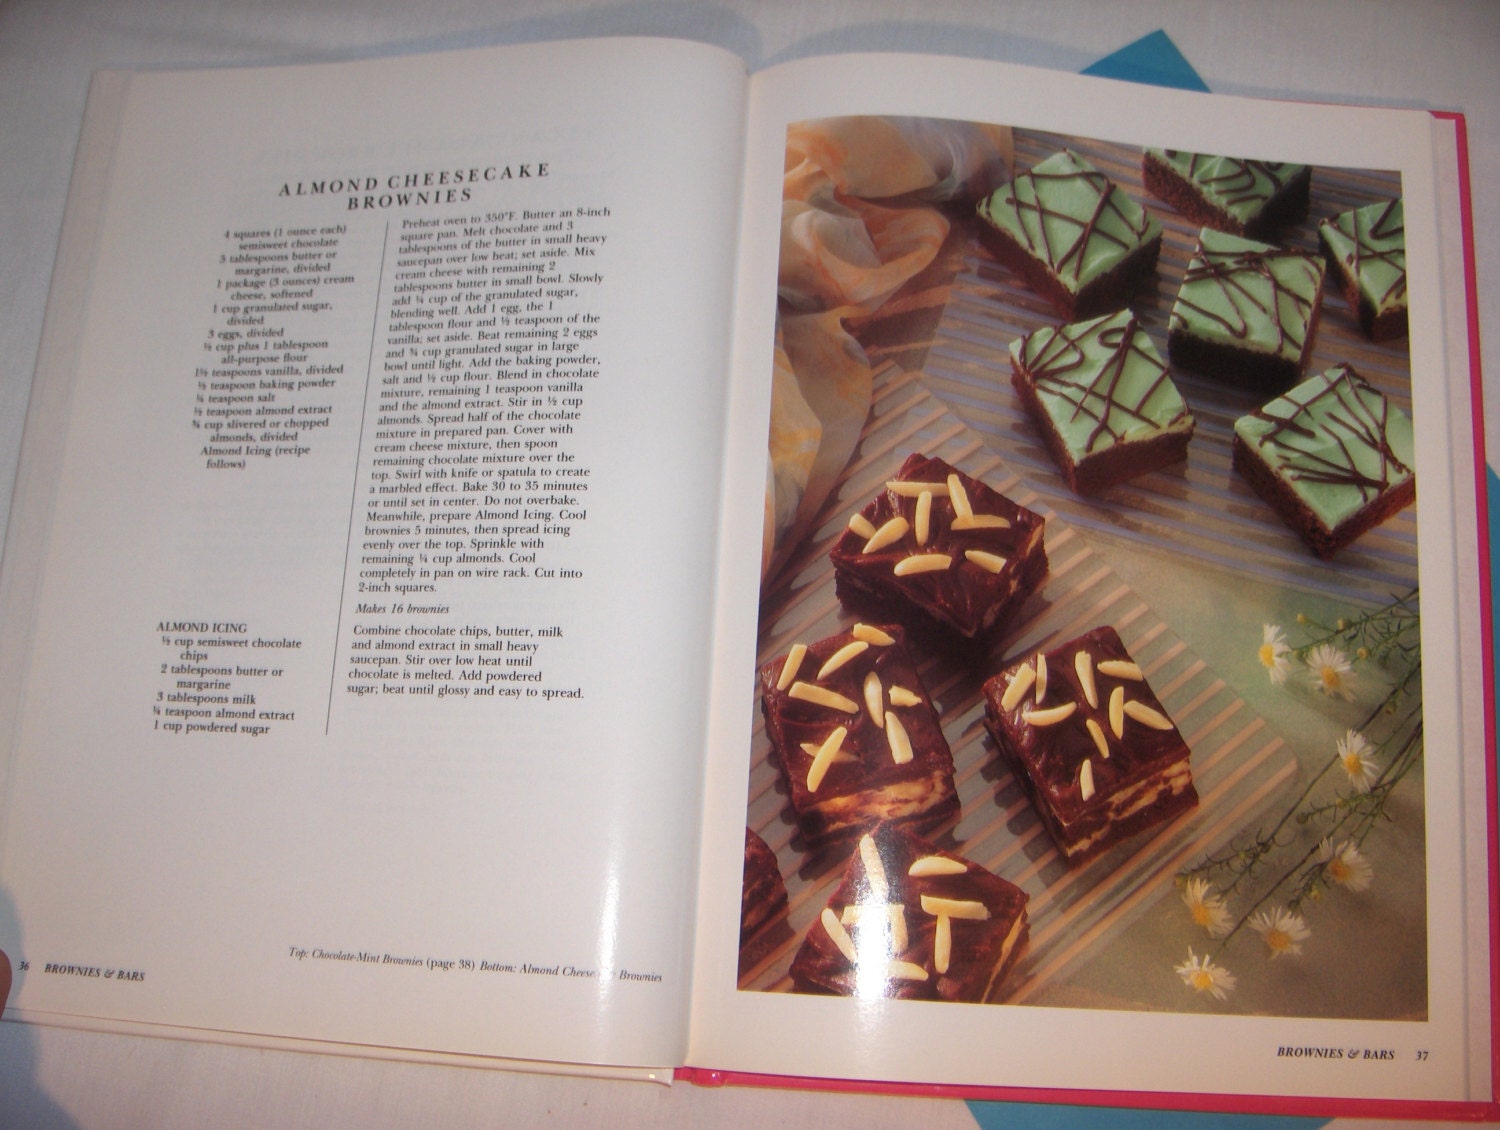 Chocolate Lover's Cookies Cookbook ©1993 Tupperware Hardcover 